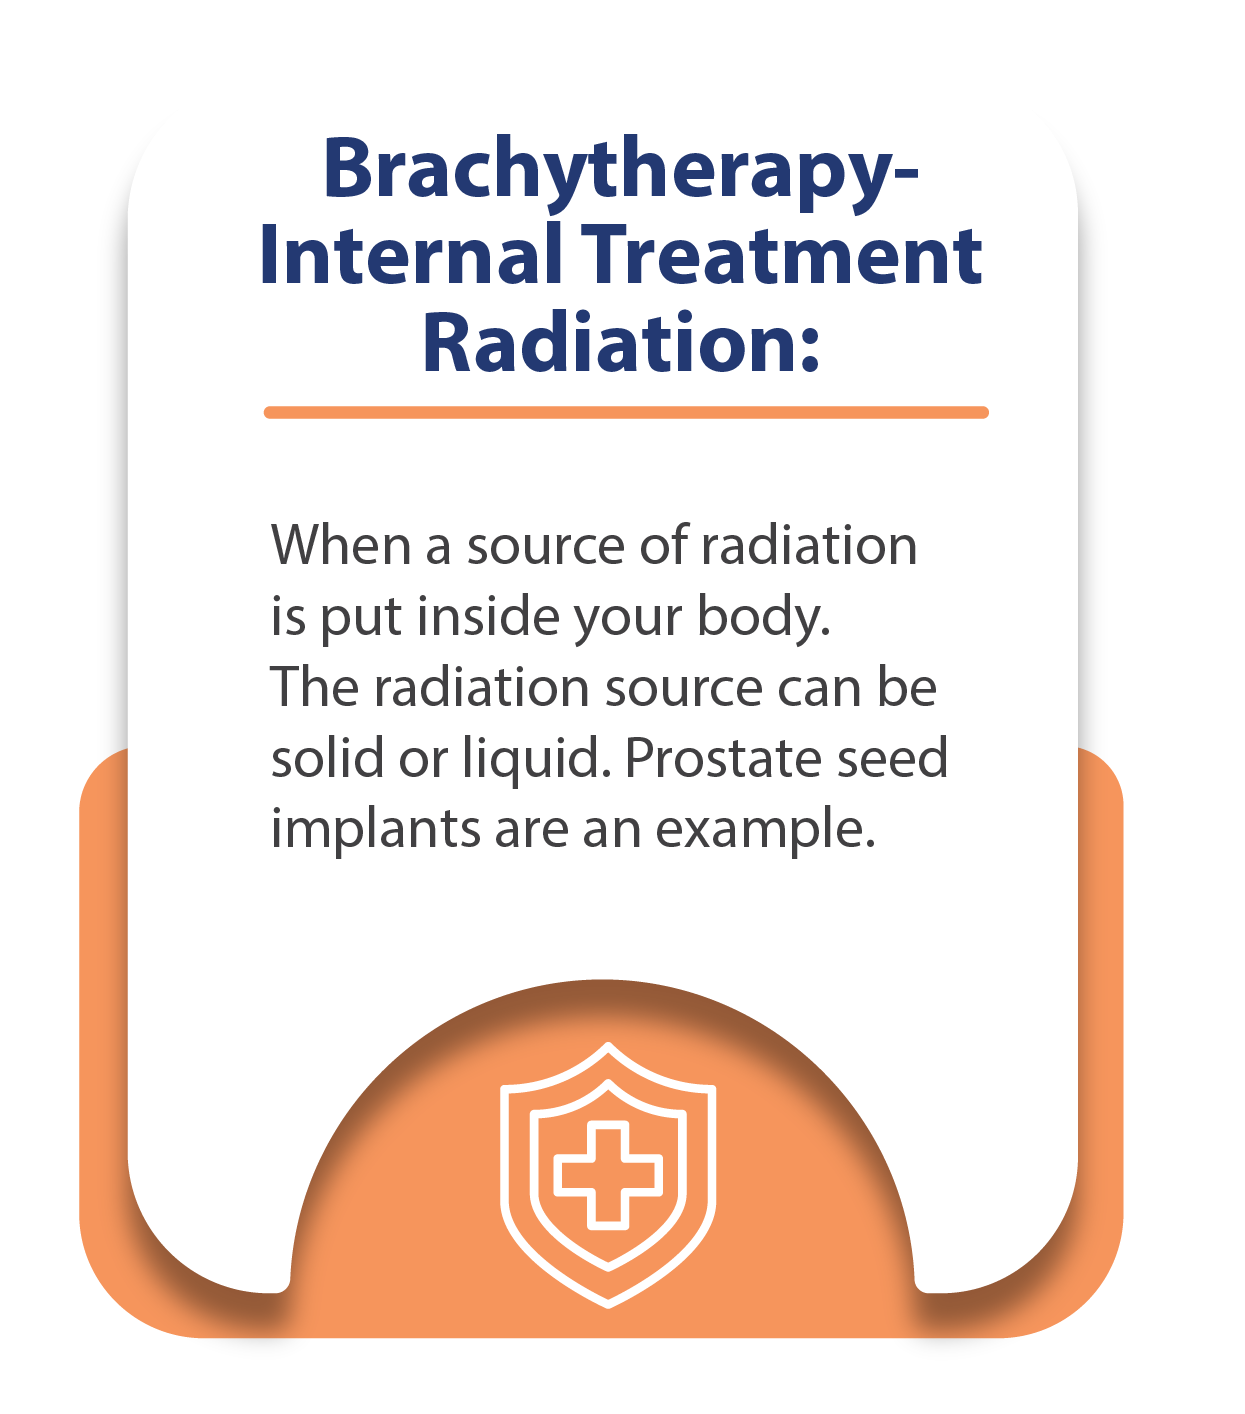 Brachytherapy-Internal Treatment Radiation